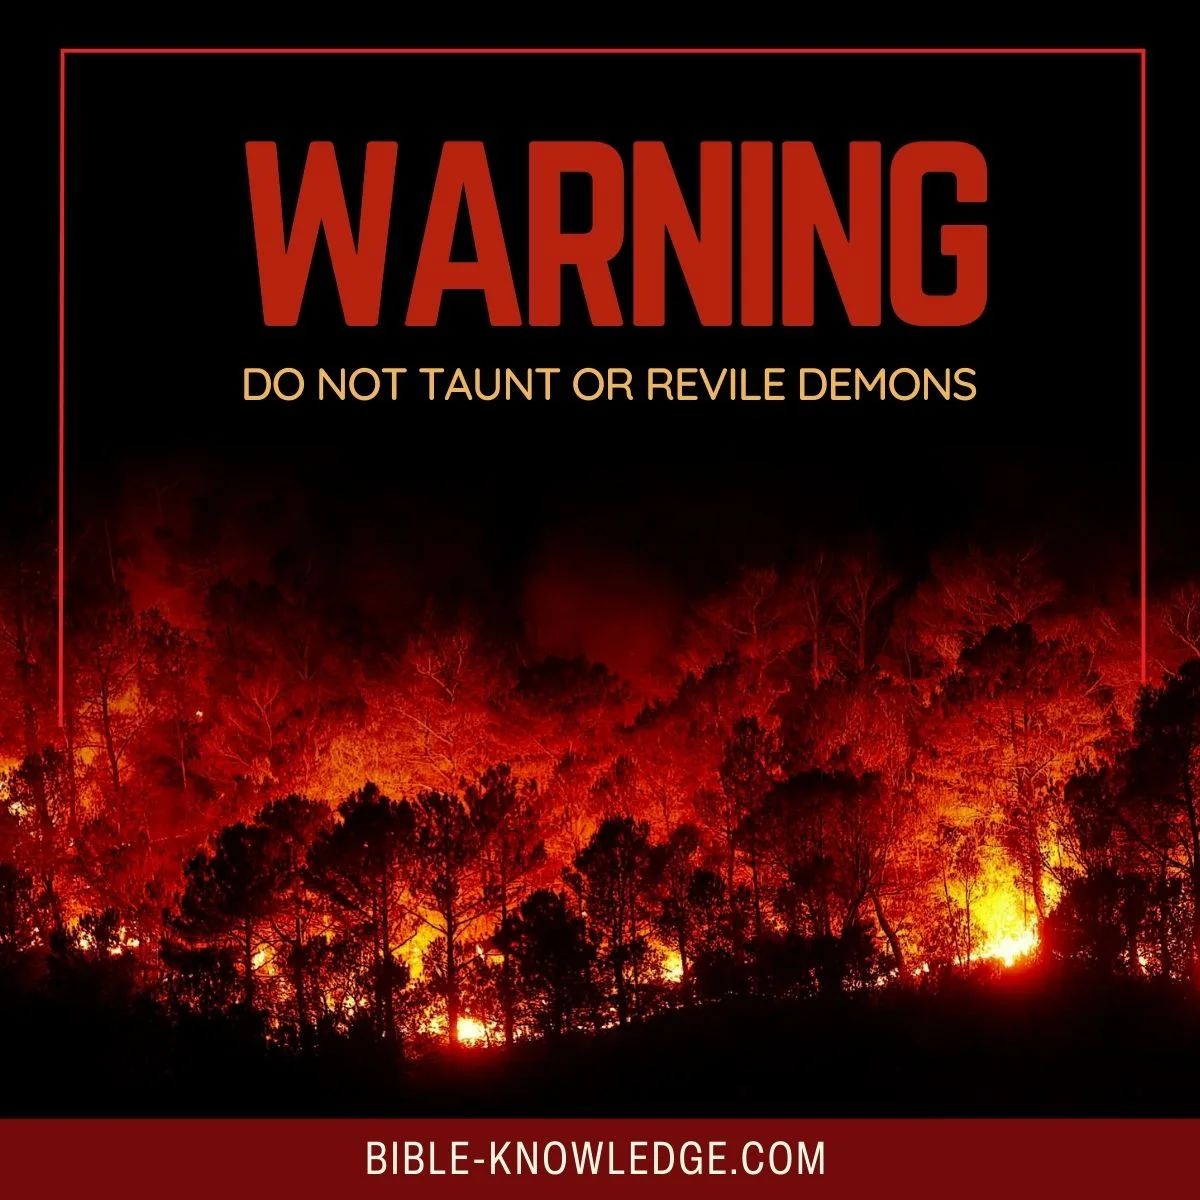 Warning - Do Not Taunt or Revile Demons